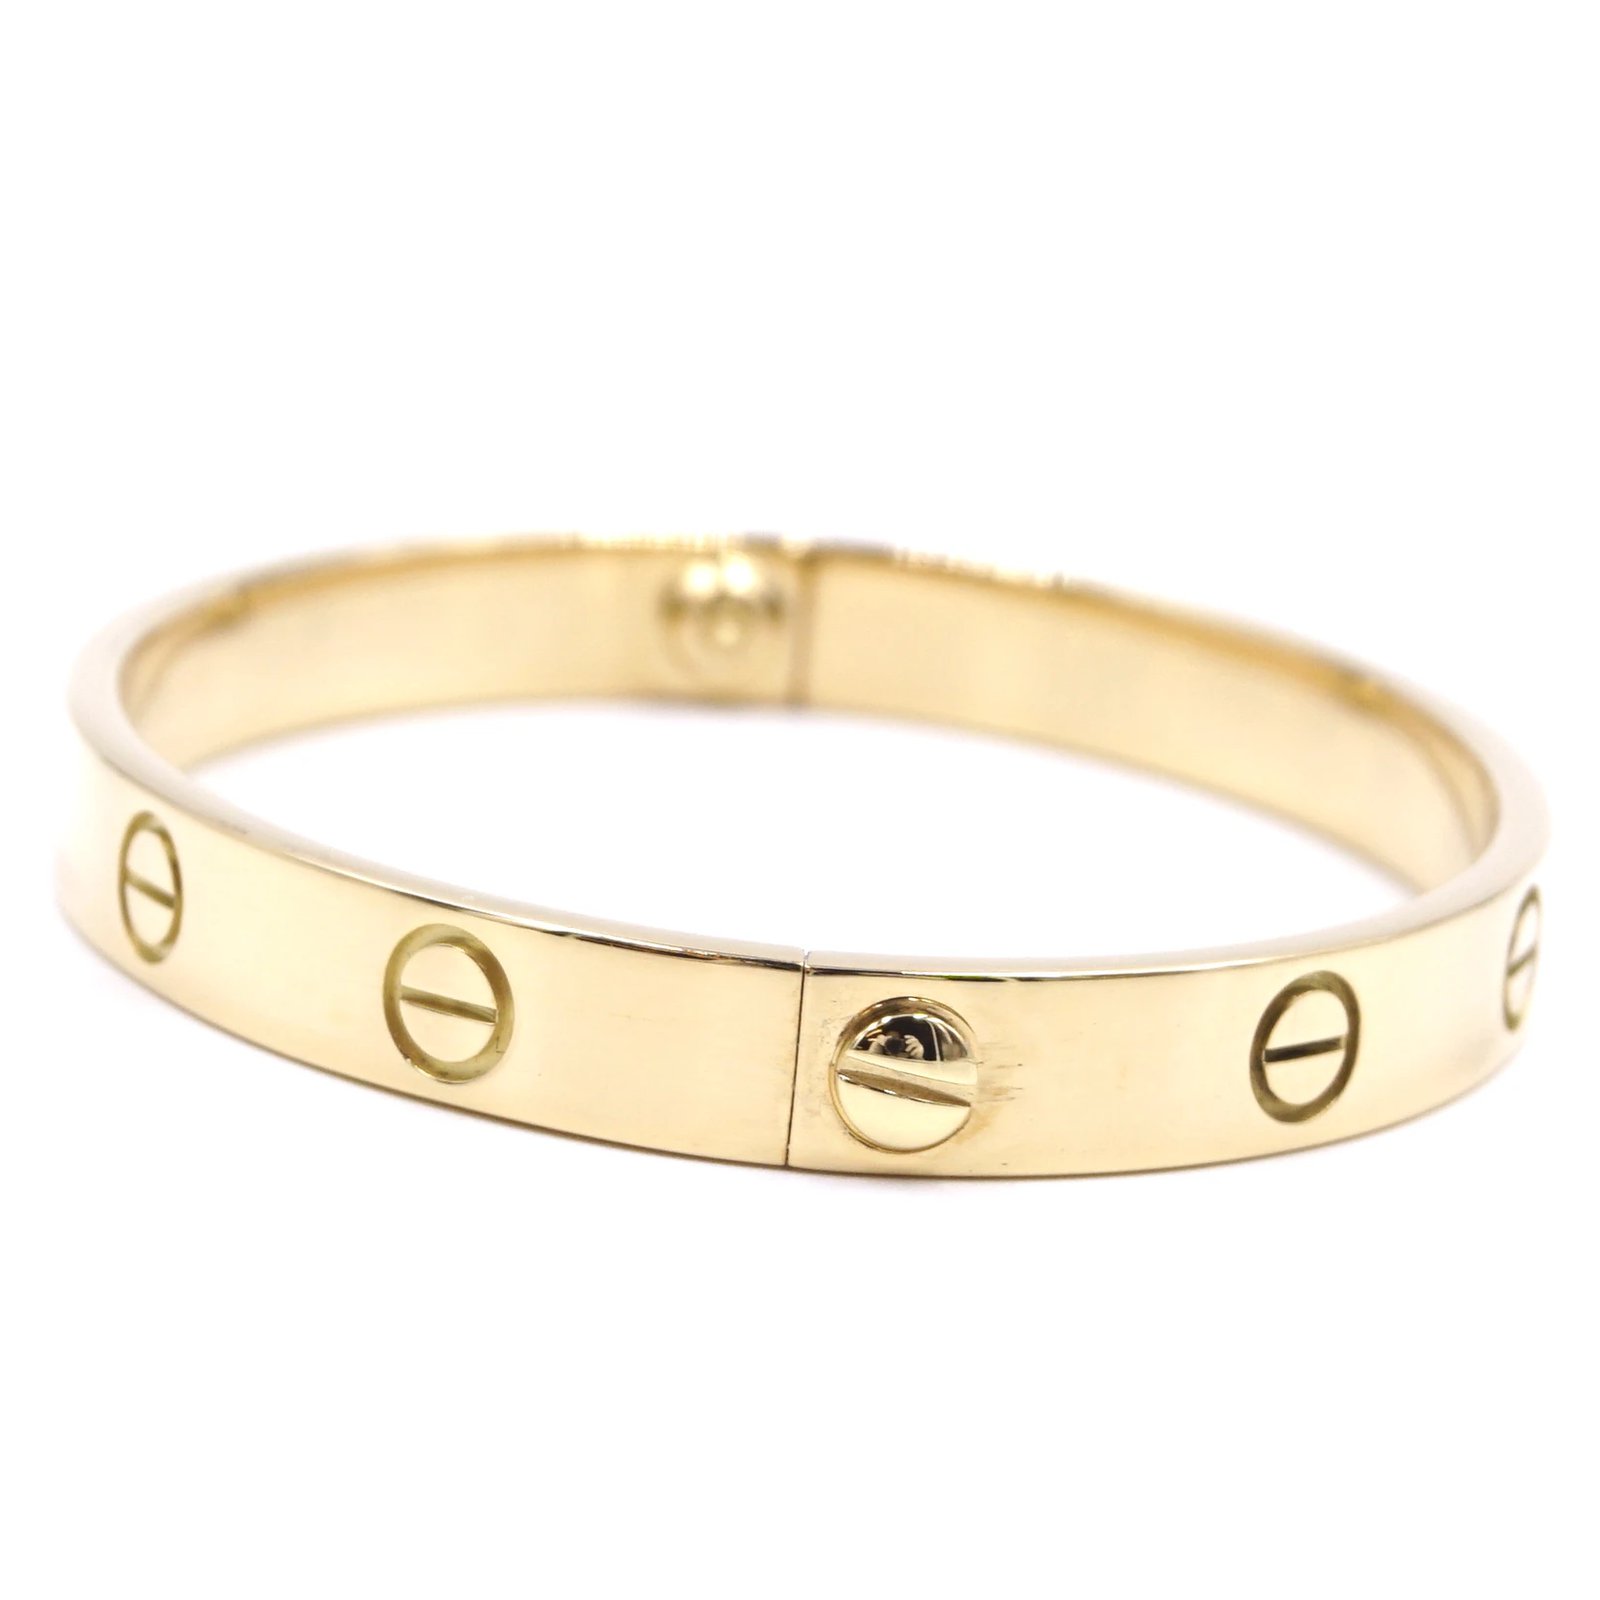 750 cartier bracelet ol4783 price